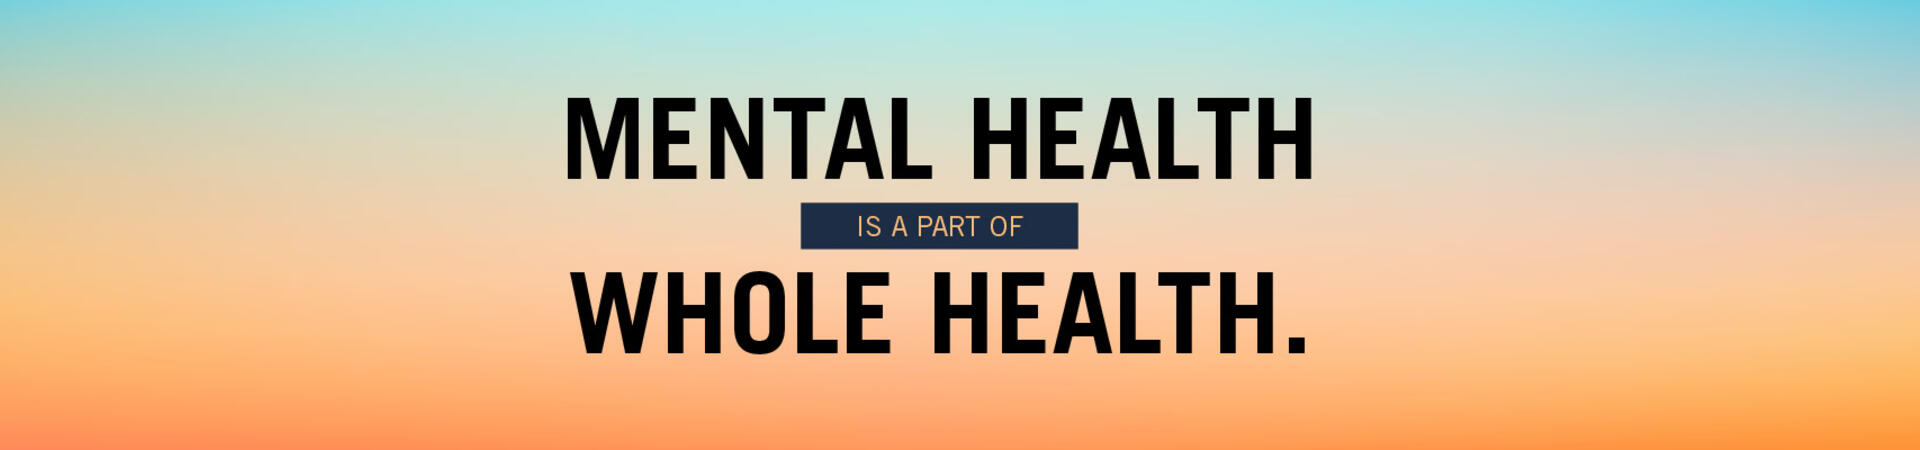 Mental Health is Whole Health